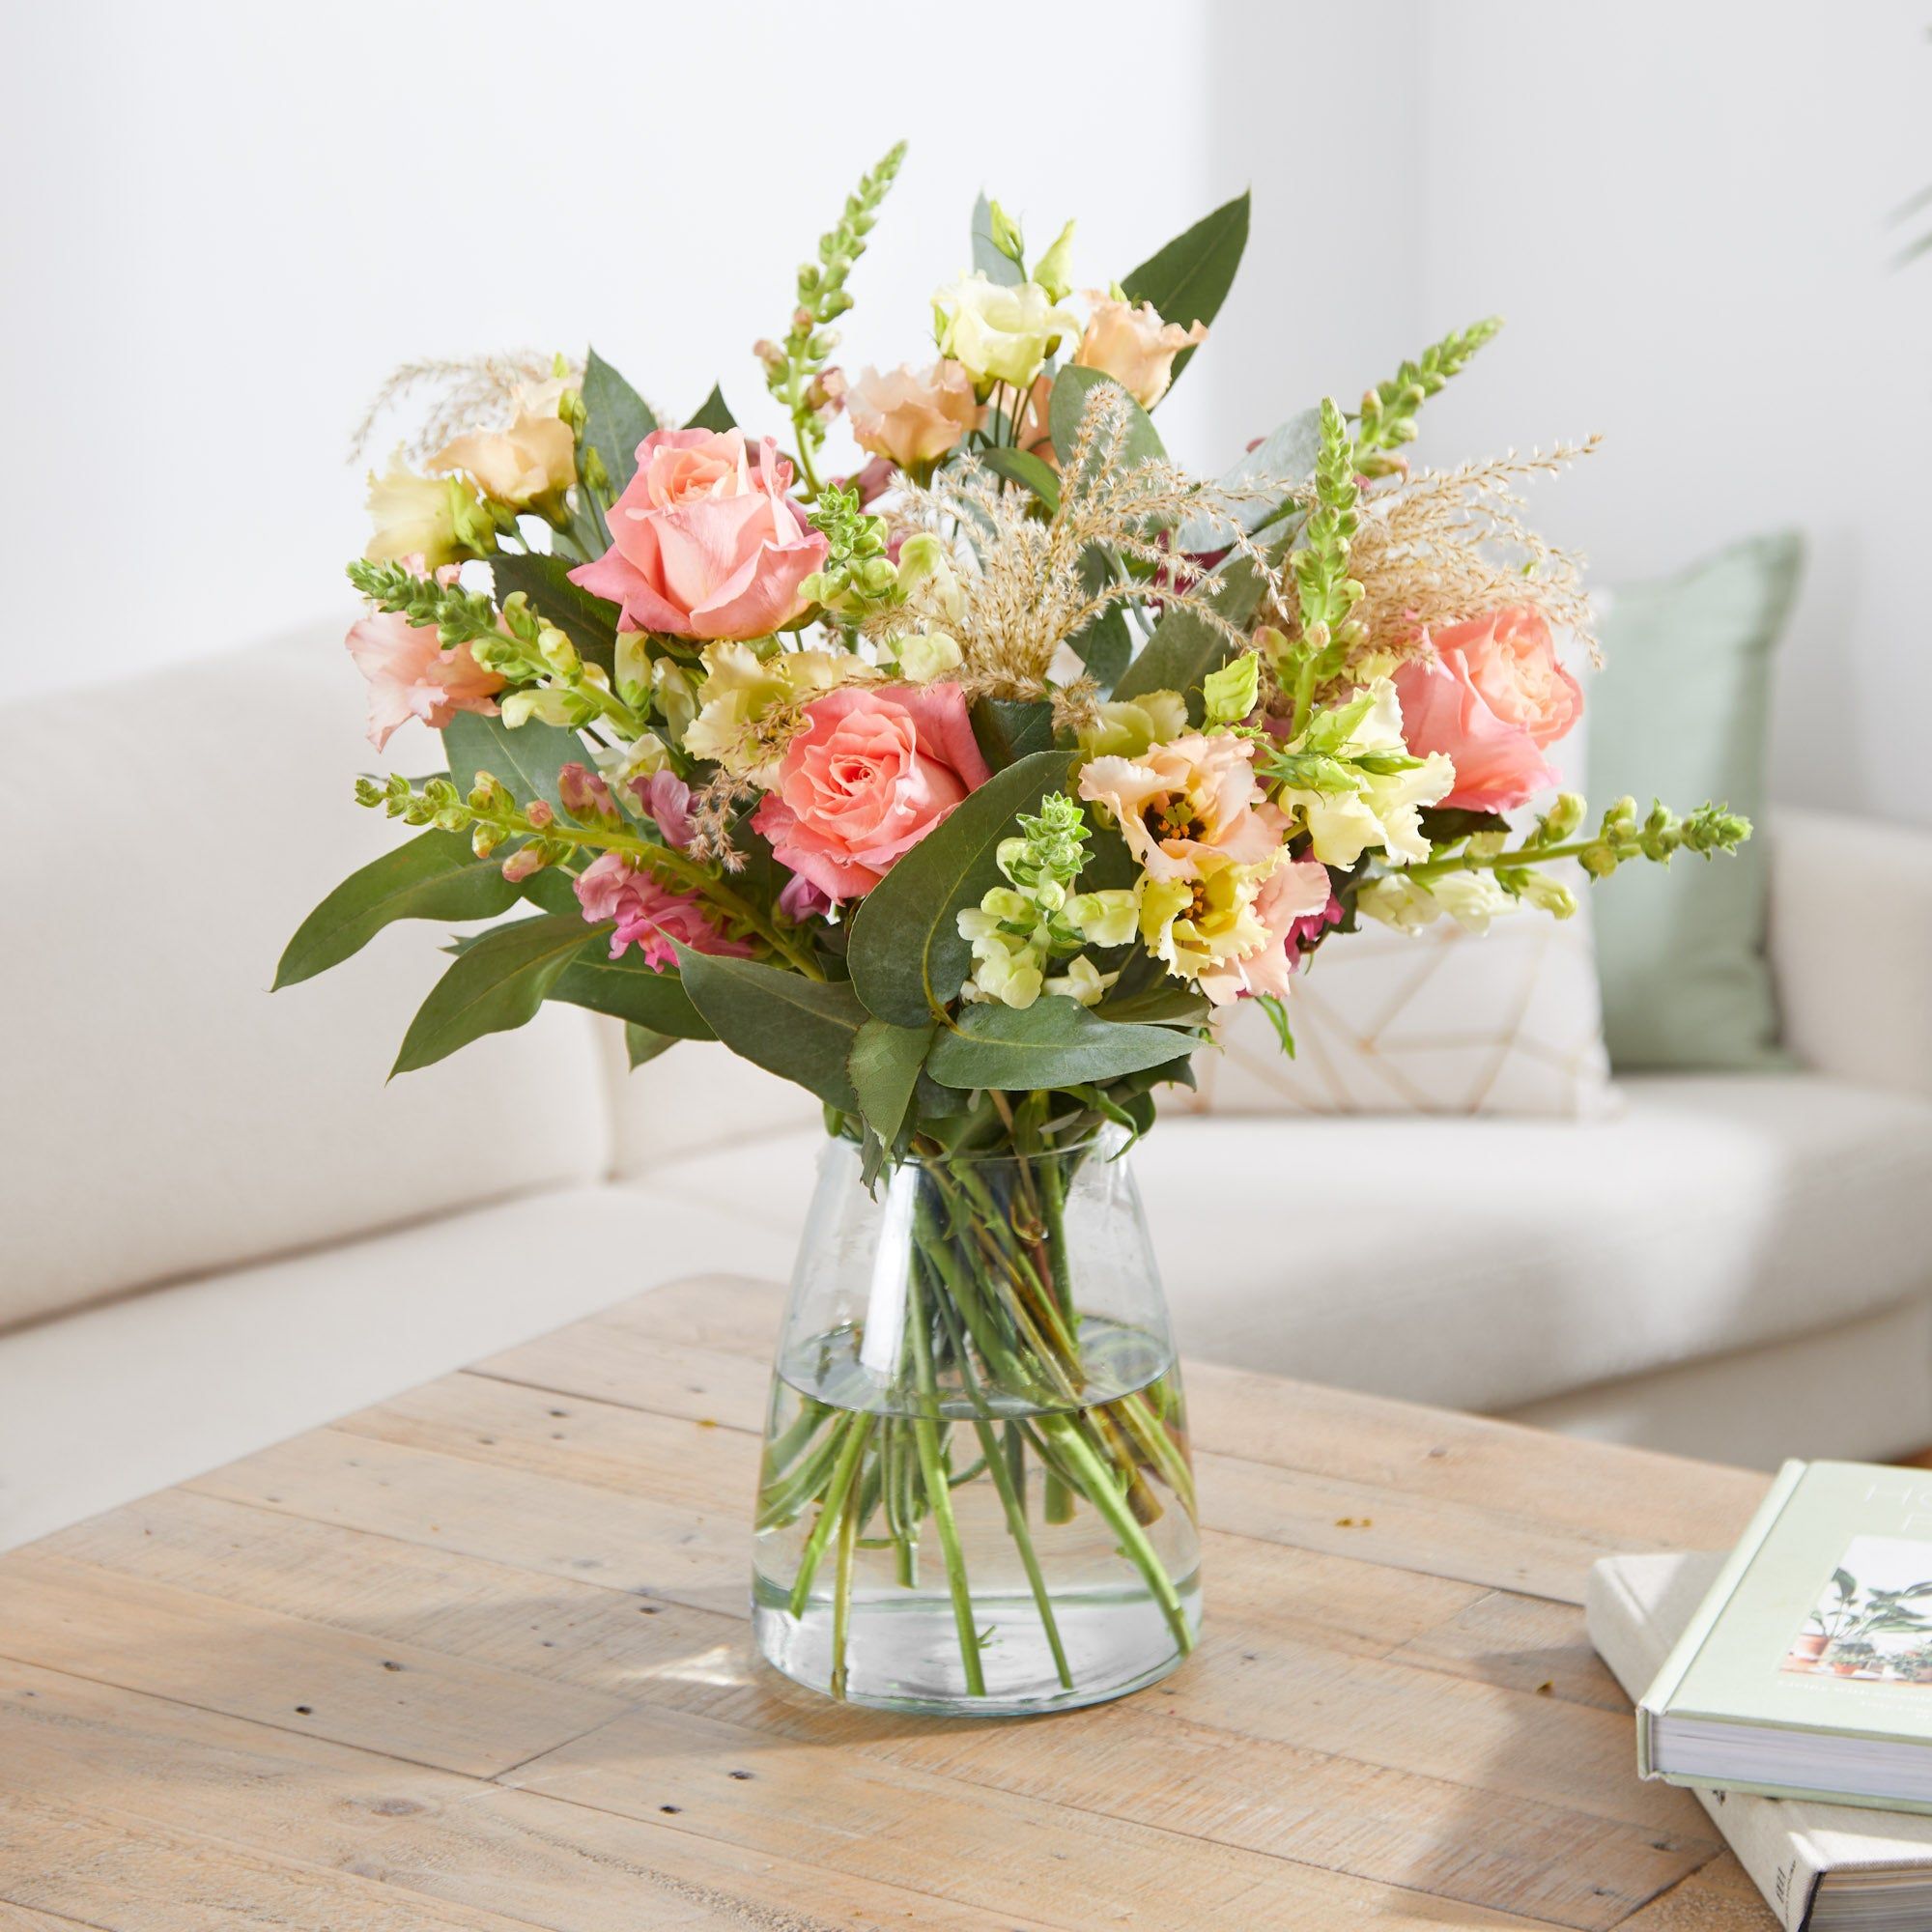 Send our 'Graceful' bouquet | Arena Flowers